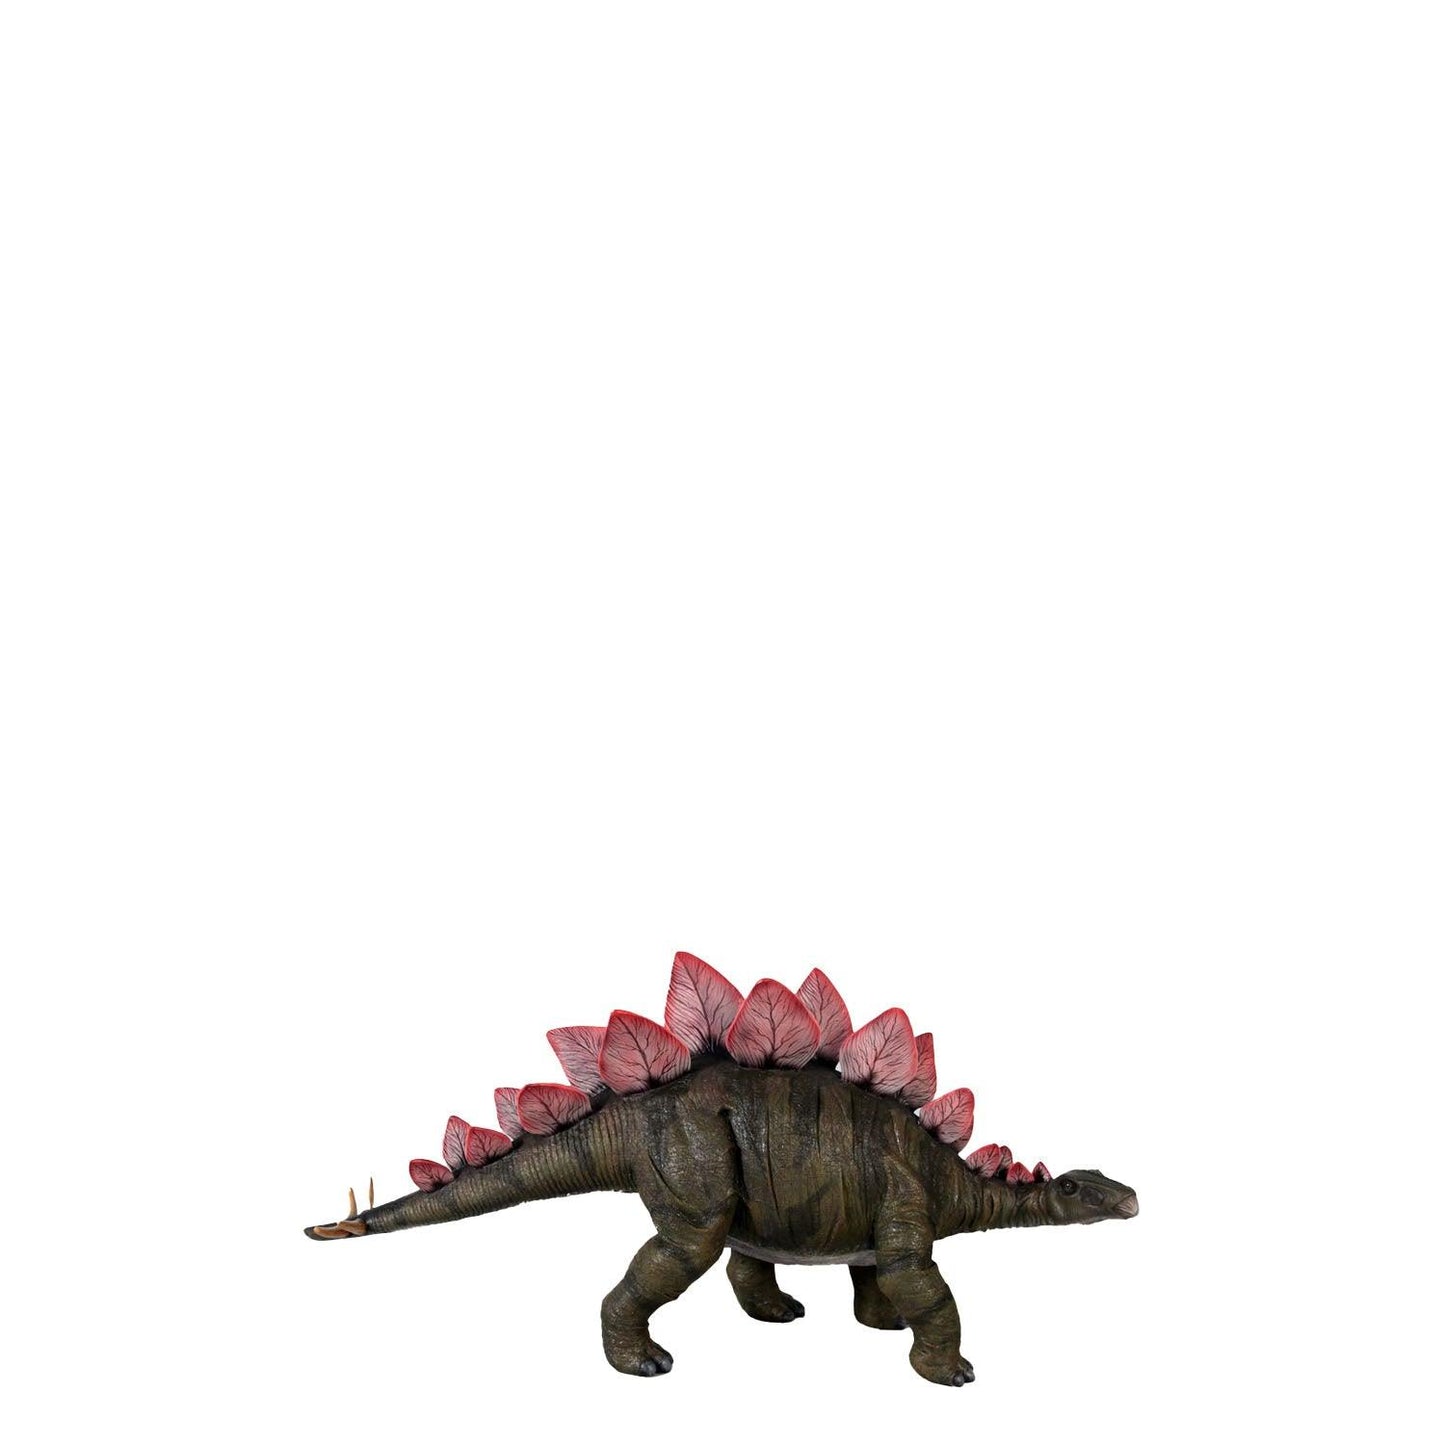 Small Stegosaurus Dinosaur Statue - LM Treasures Prop Rentals 